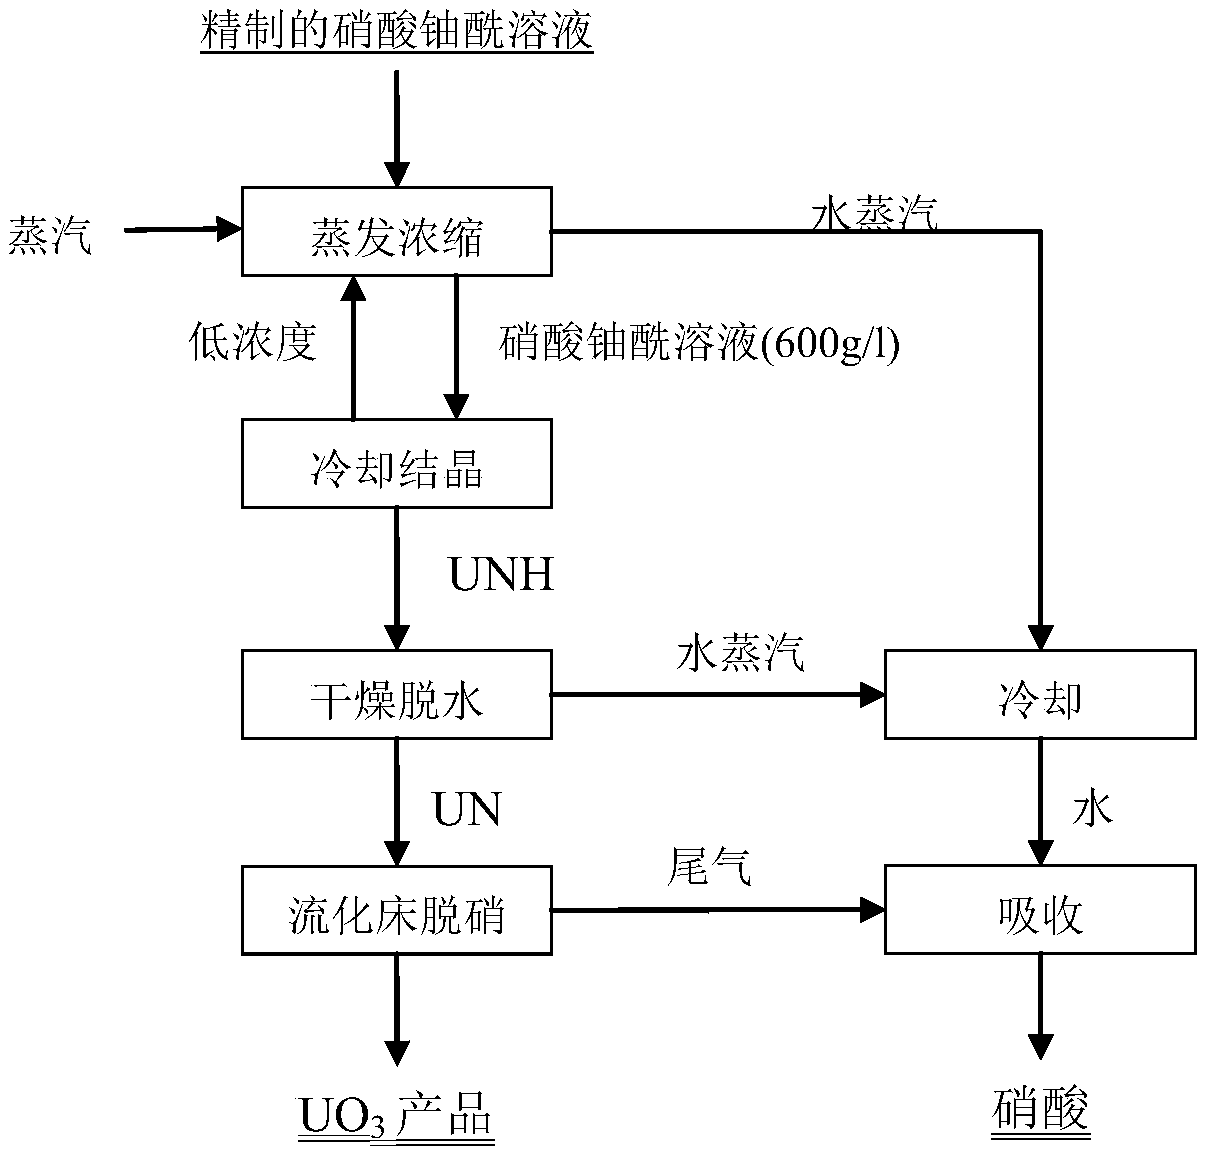 Method of preparing high-activity uranium trioxide by thermal denitration of uranyl nitrate